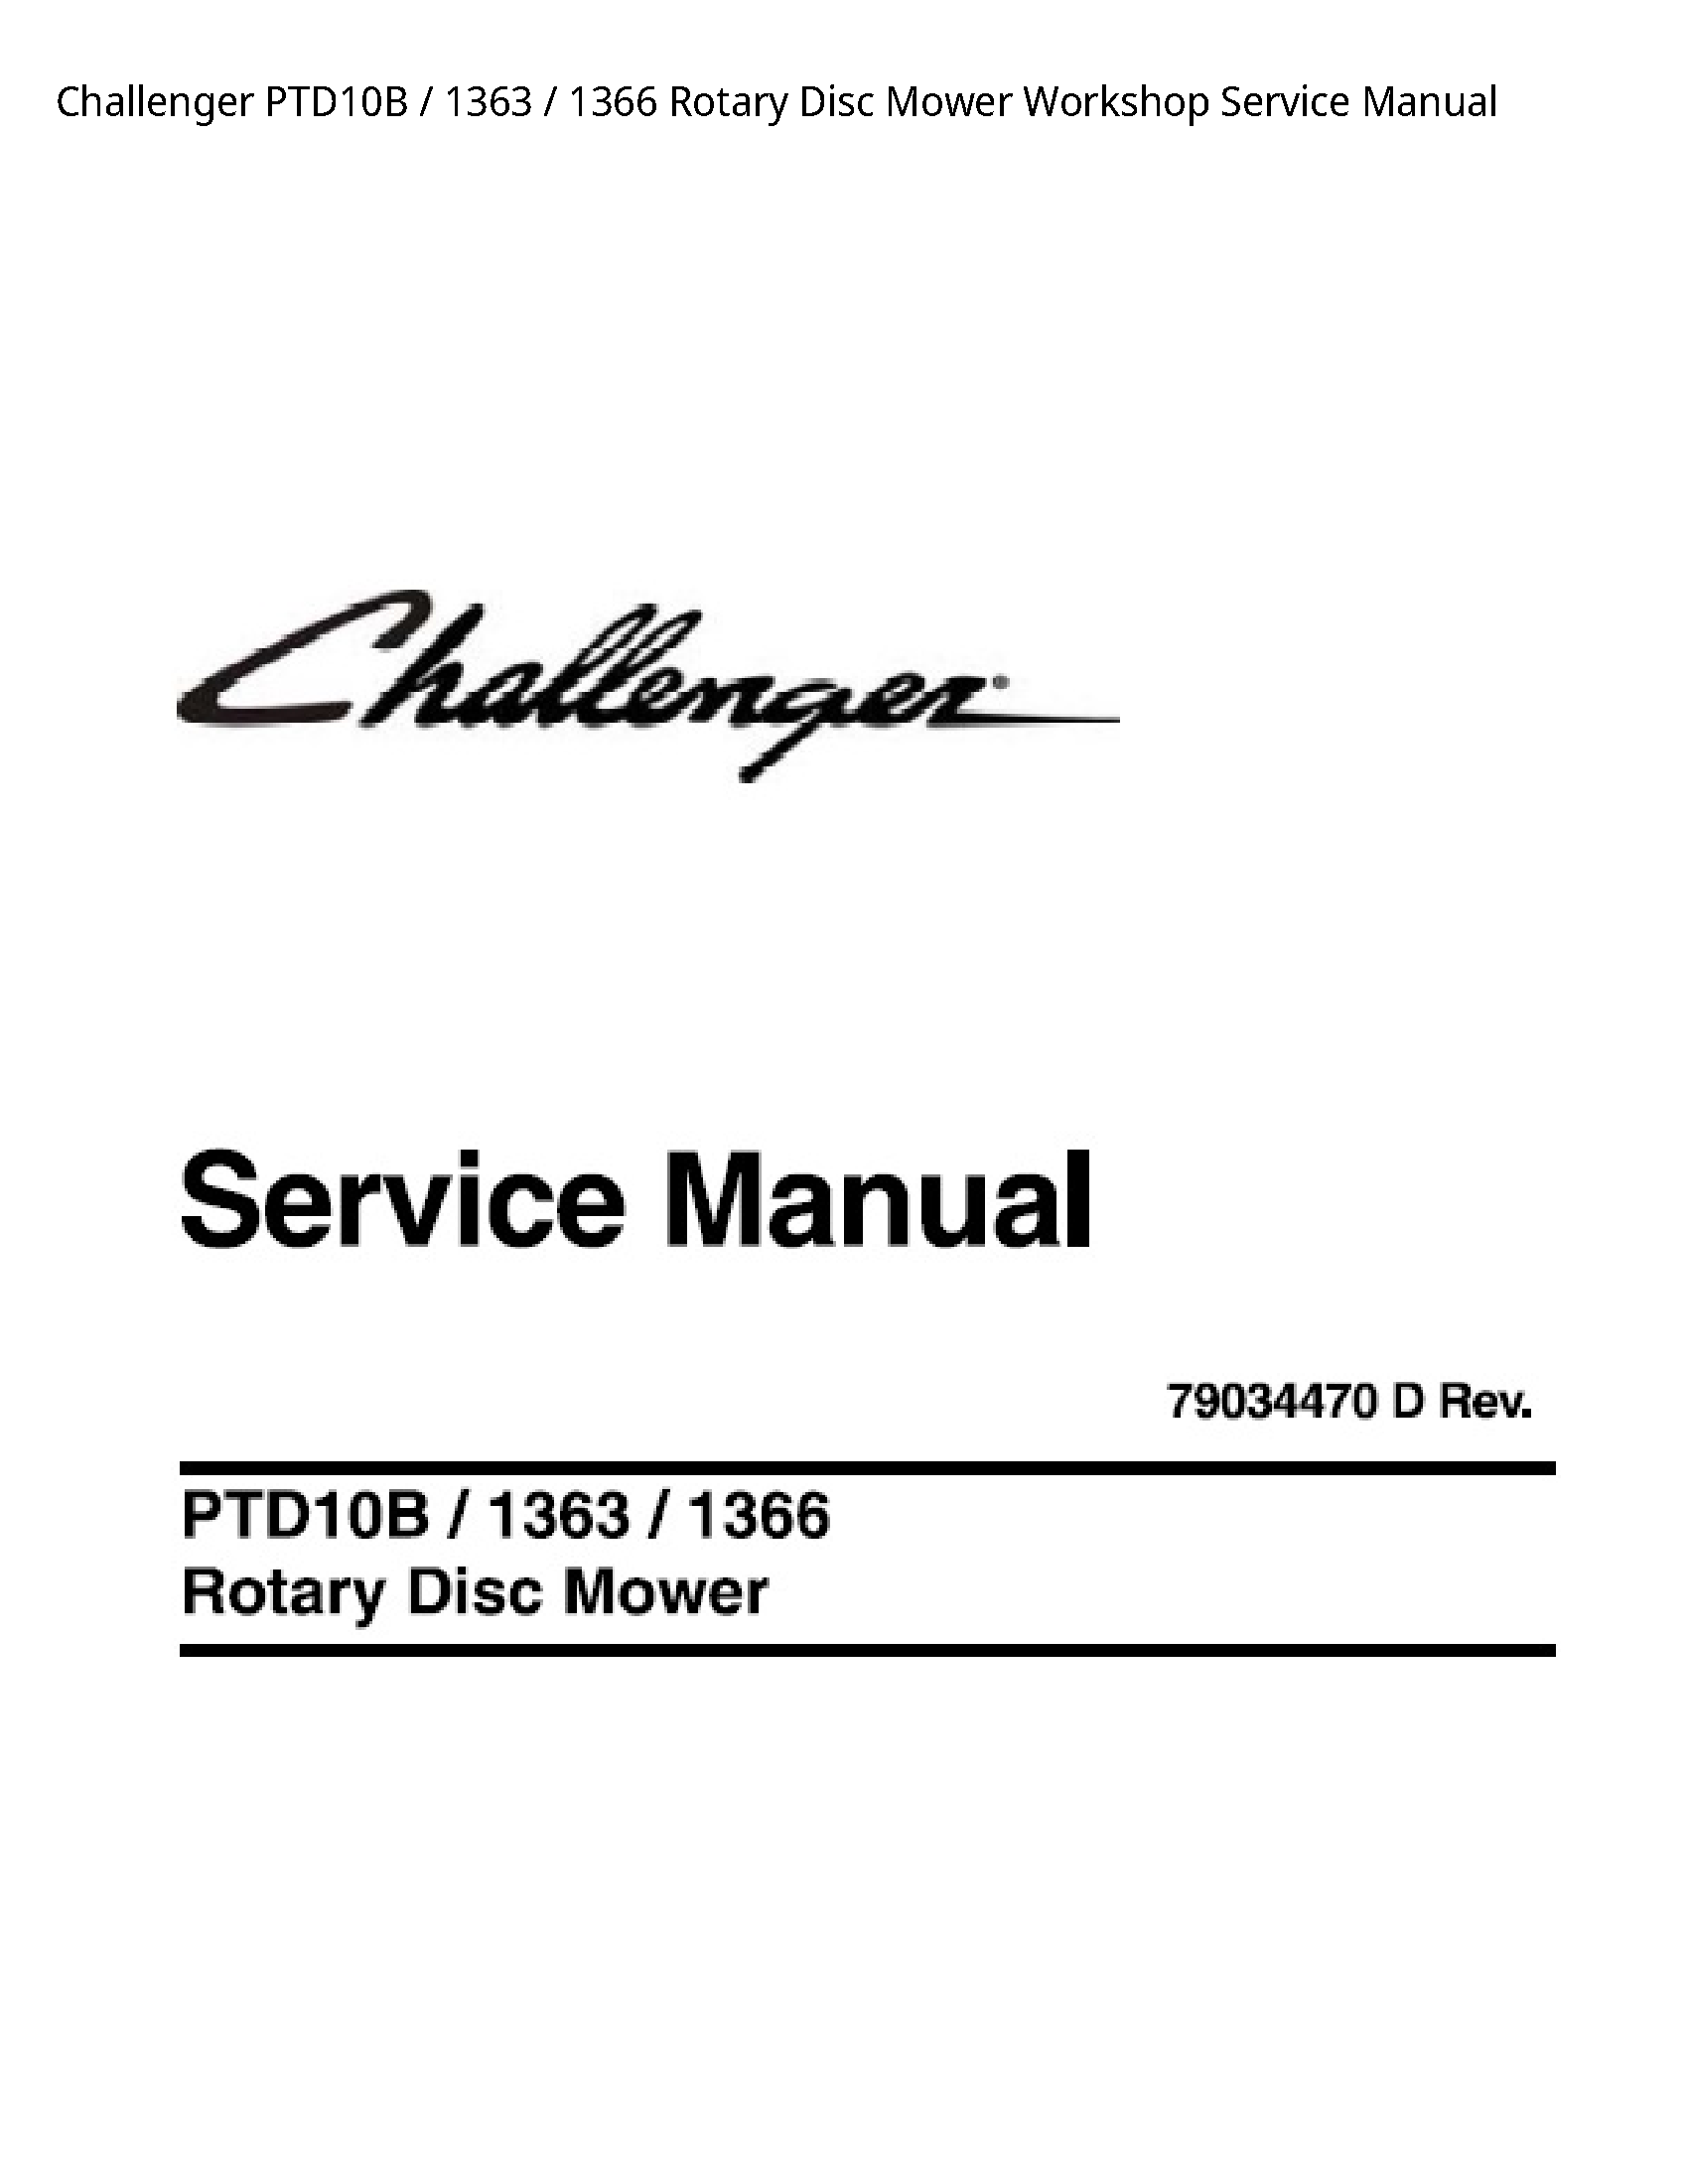 Challenger PTD10B Rotary Disc Mower Service manual